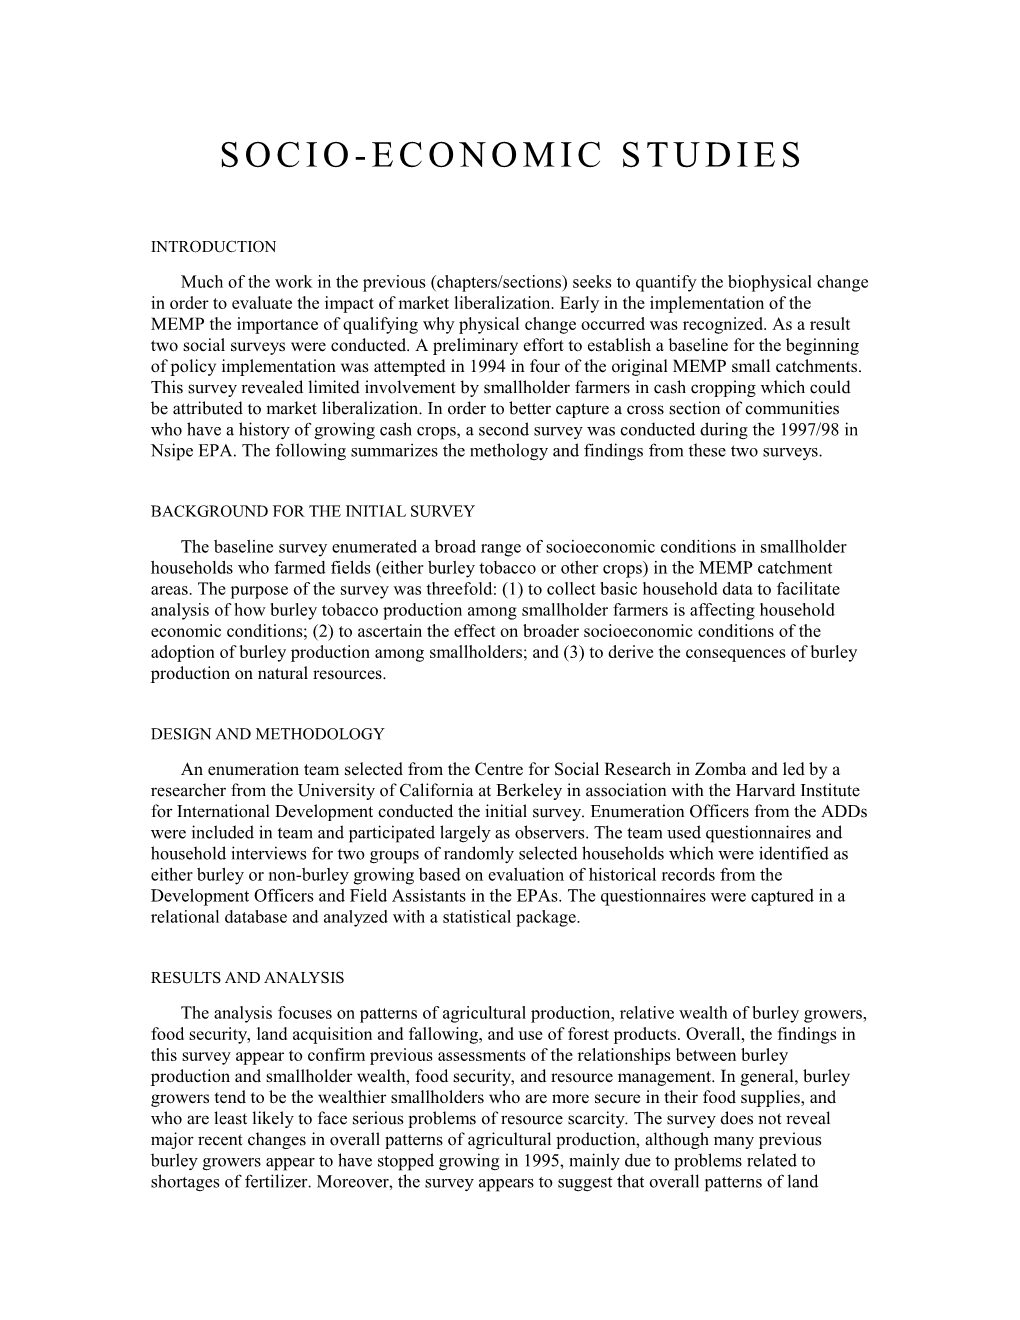 The Socioeconomic Baseline Study